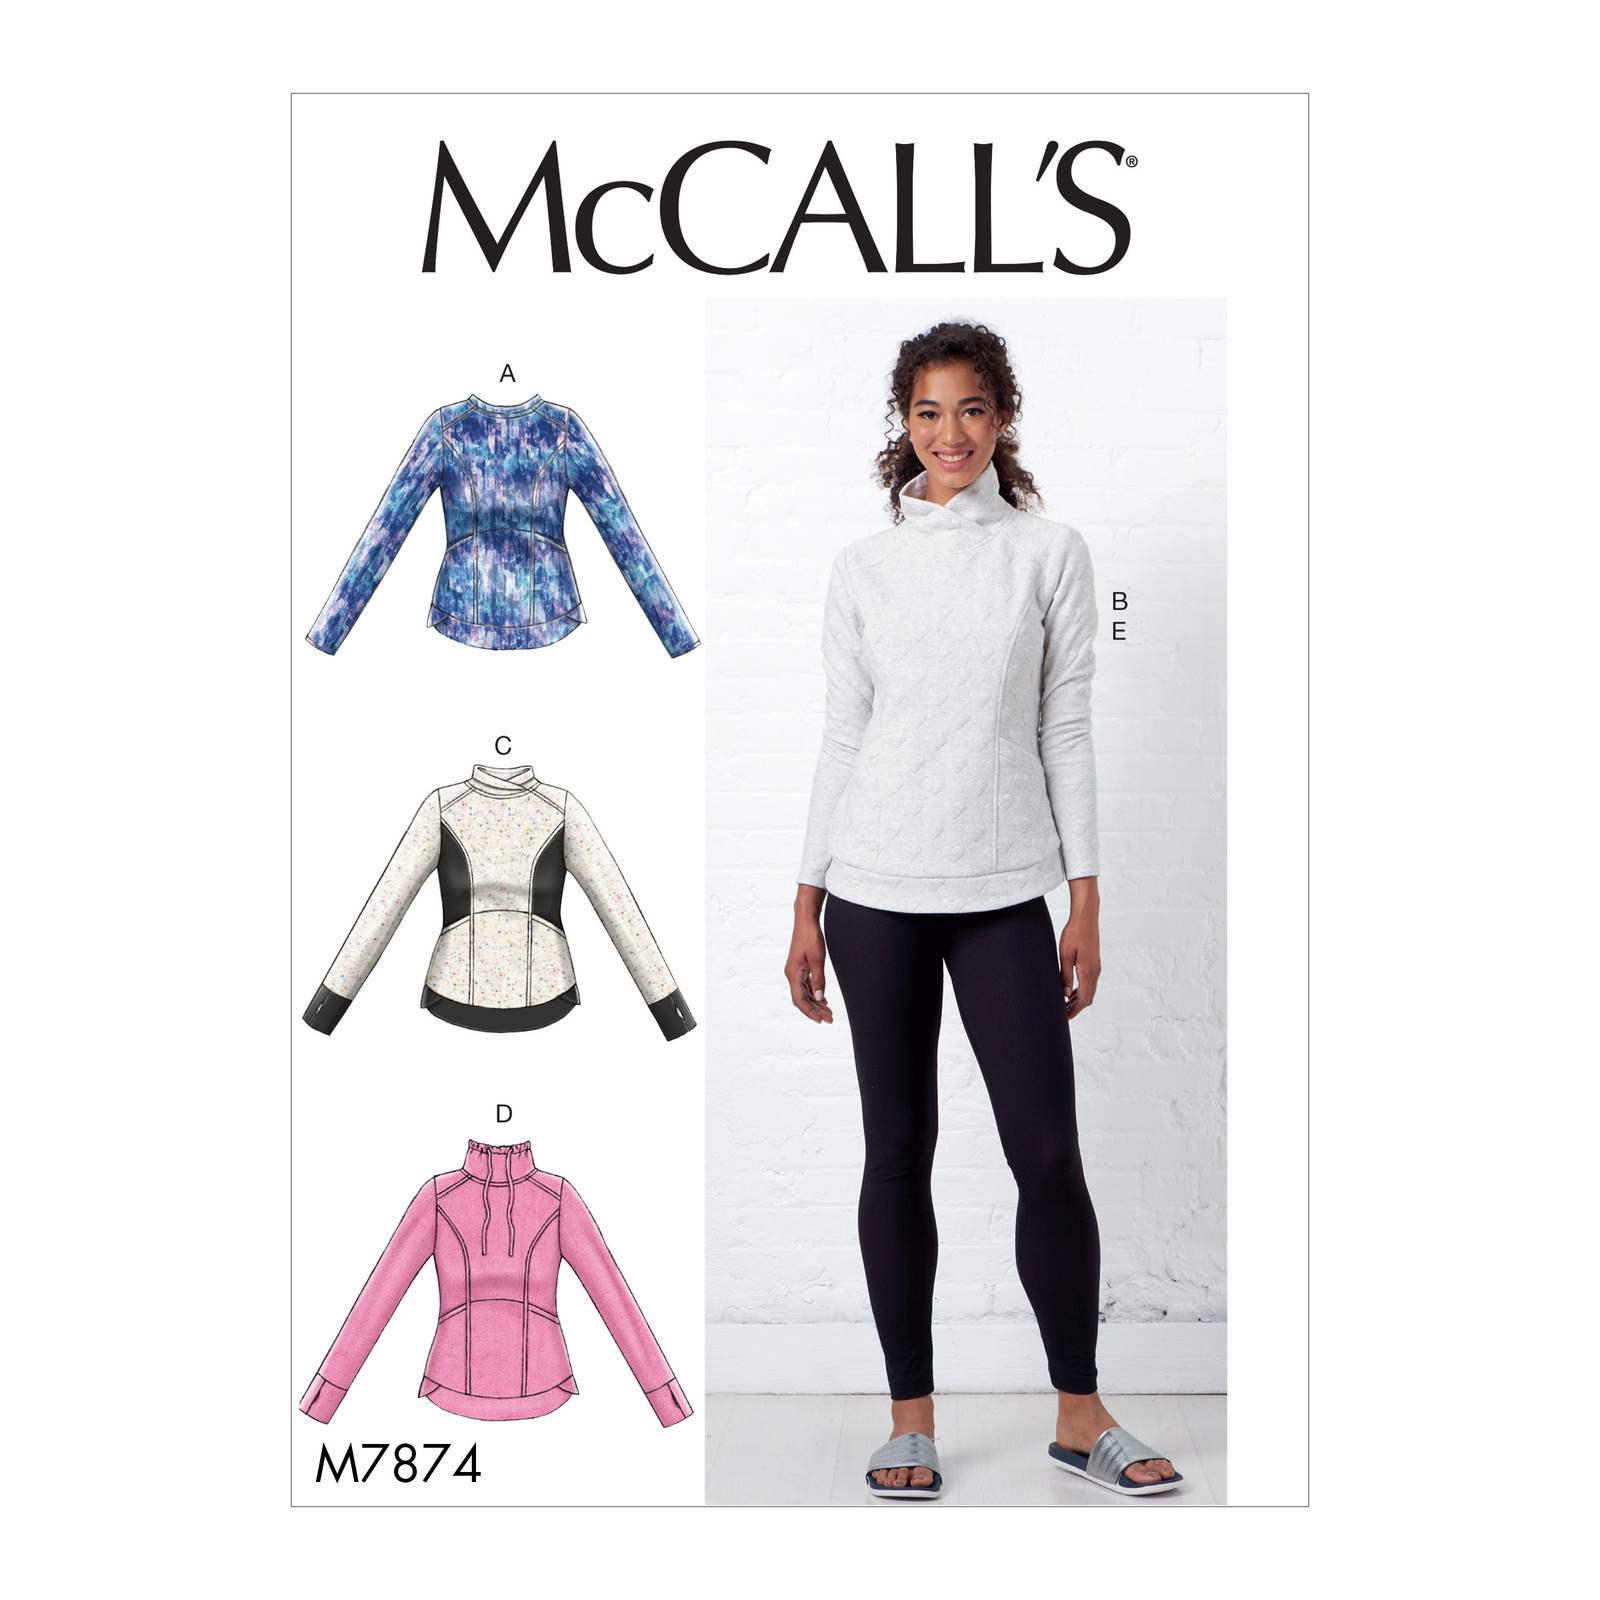 McCalls 7874